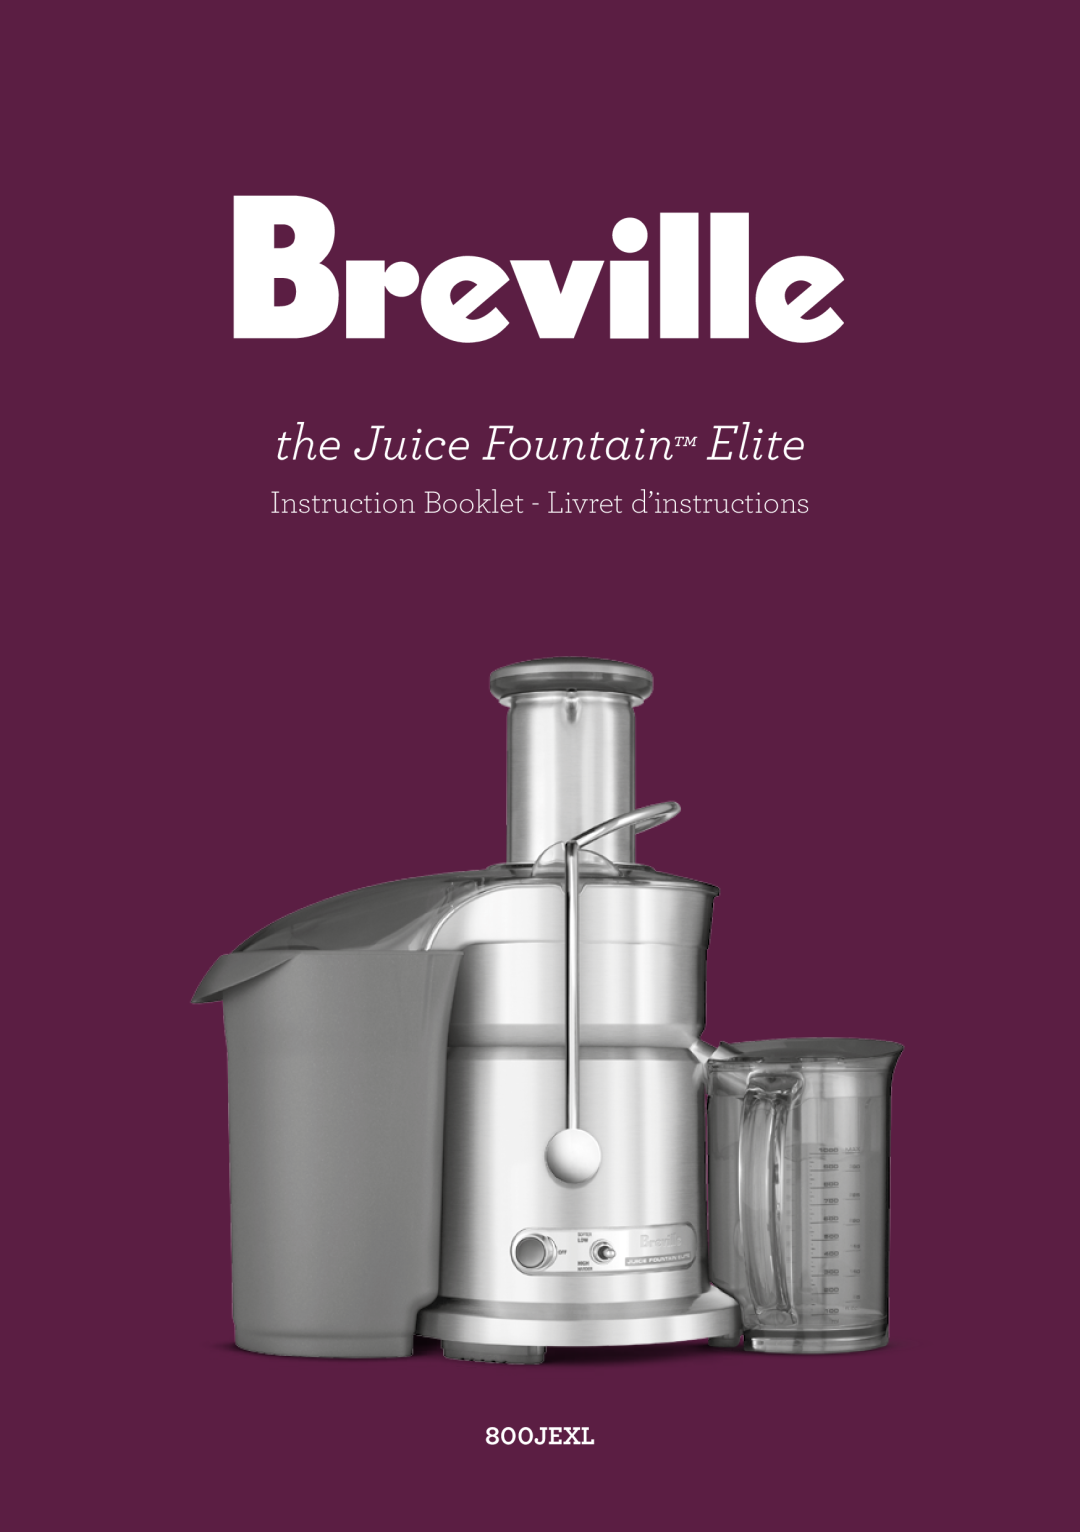 Breville 800JEXL manual the Juice Fountain Elite, Instruction Booklet - Livret d’instructions 